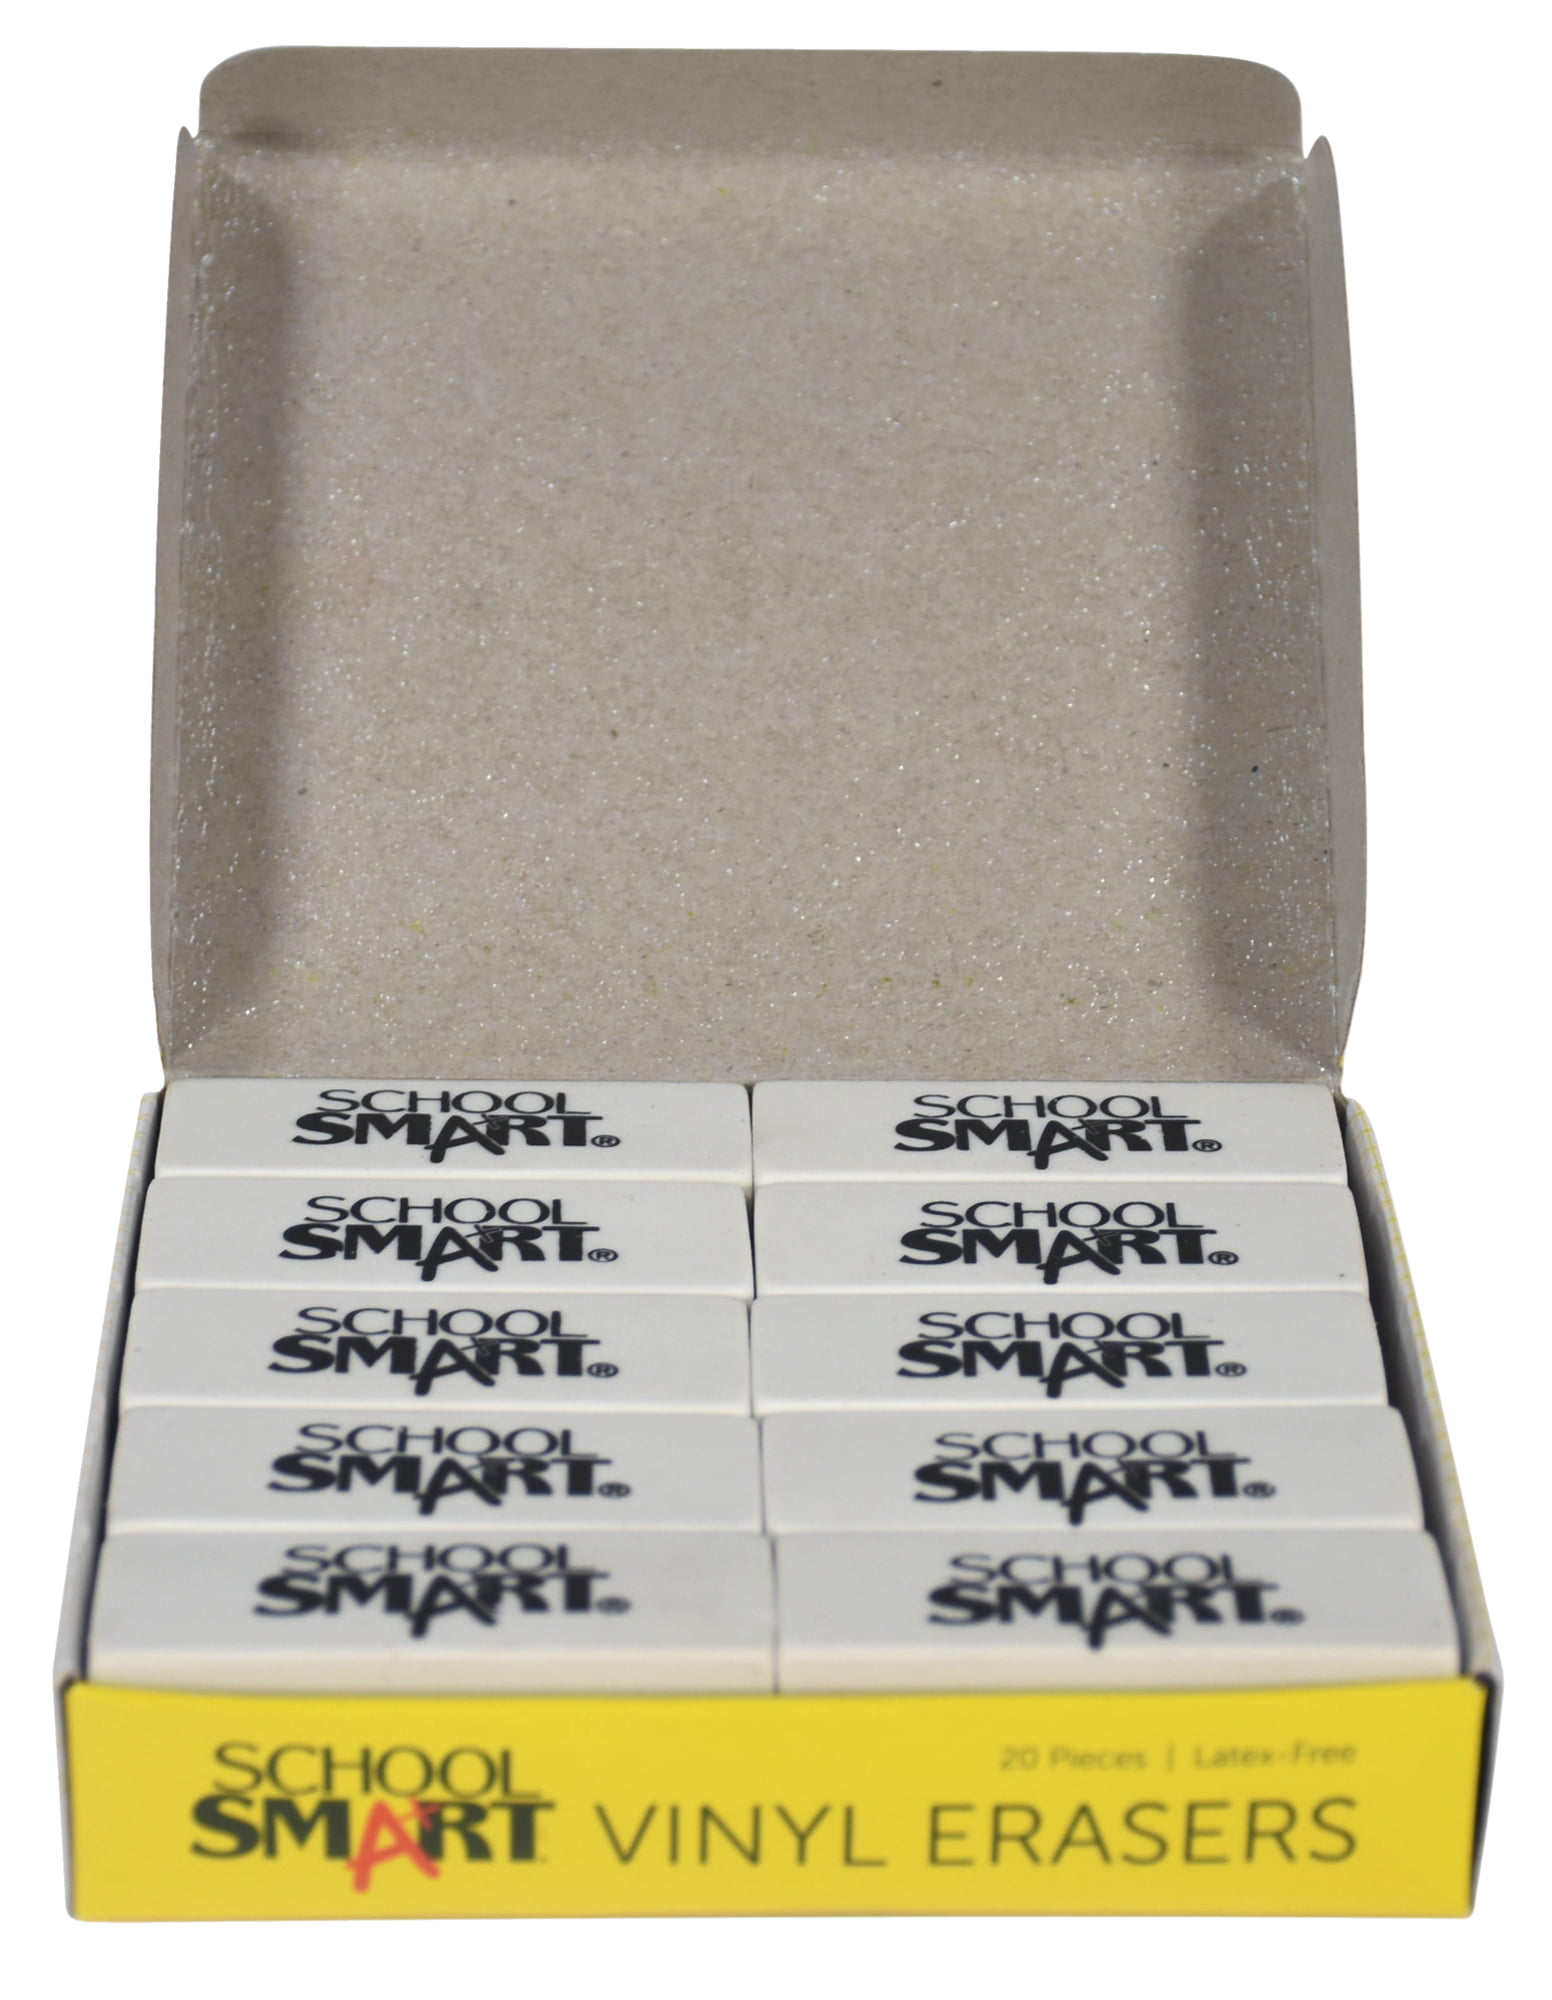 School Smart Vinyl Block Erasers, 2-1/2 x 7/8 x 1/2 Inches, White, Pack of  20 